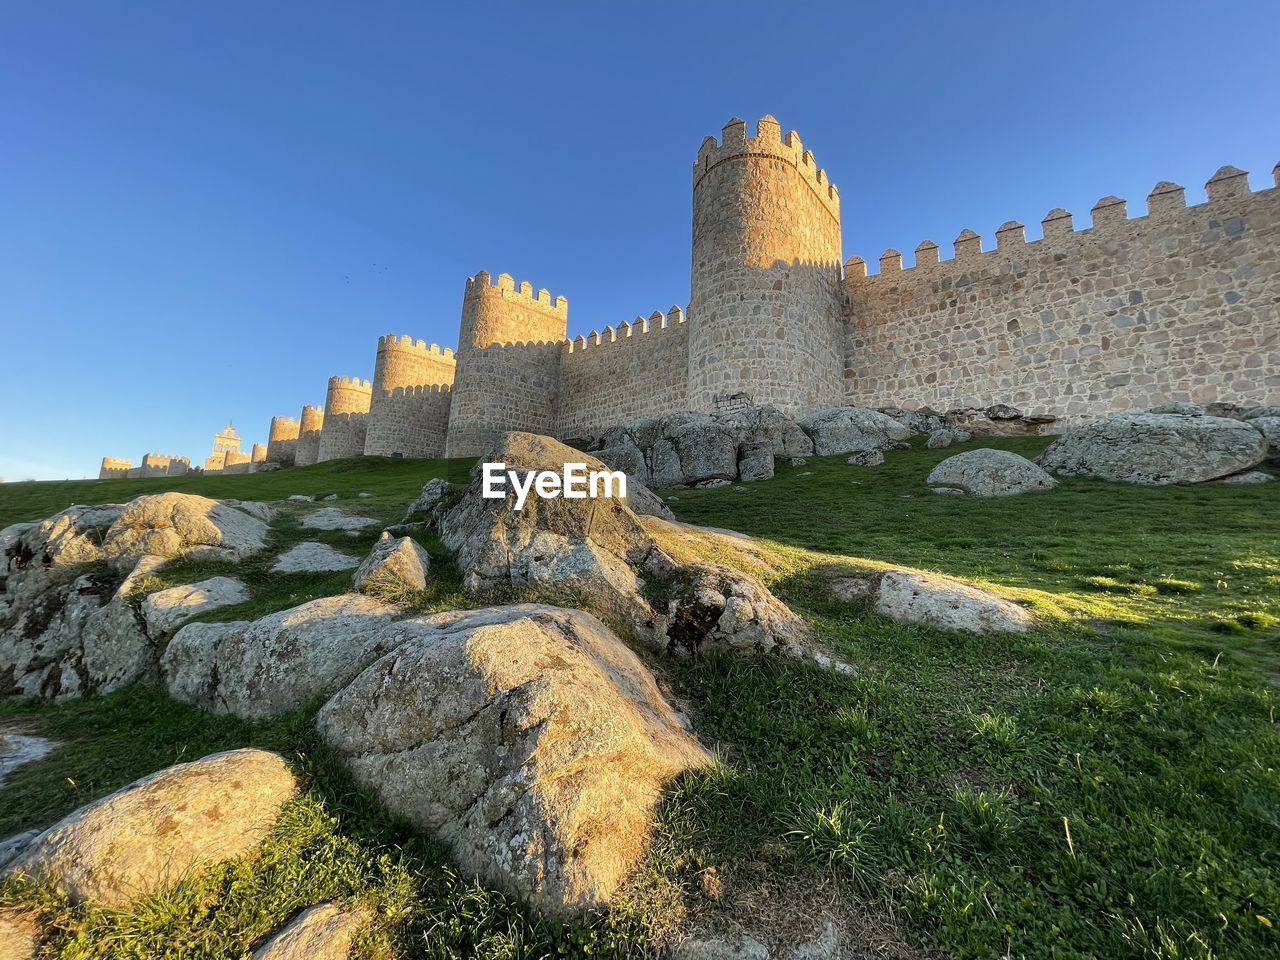 Walled city of avila